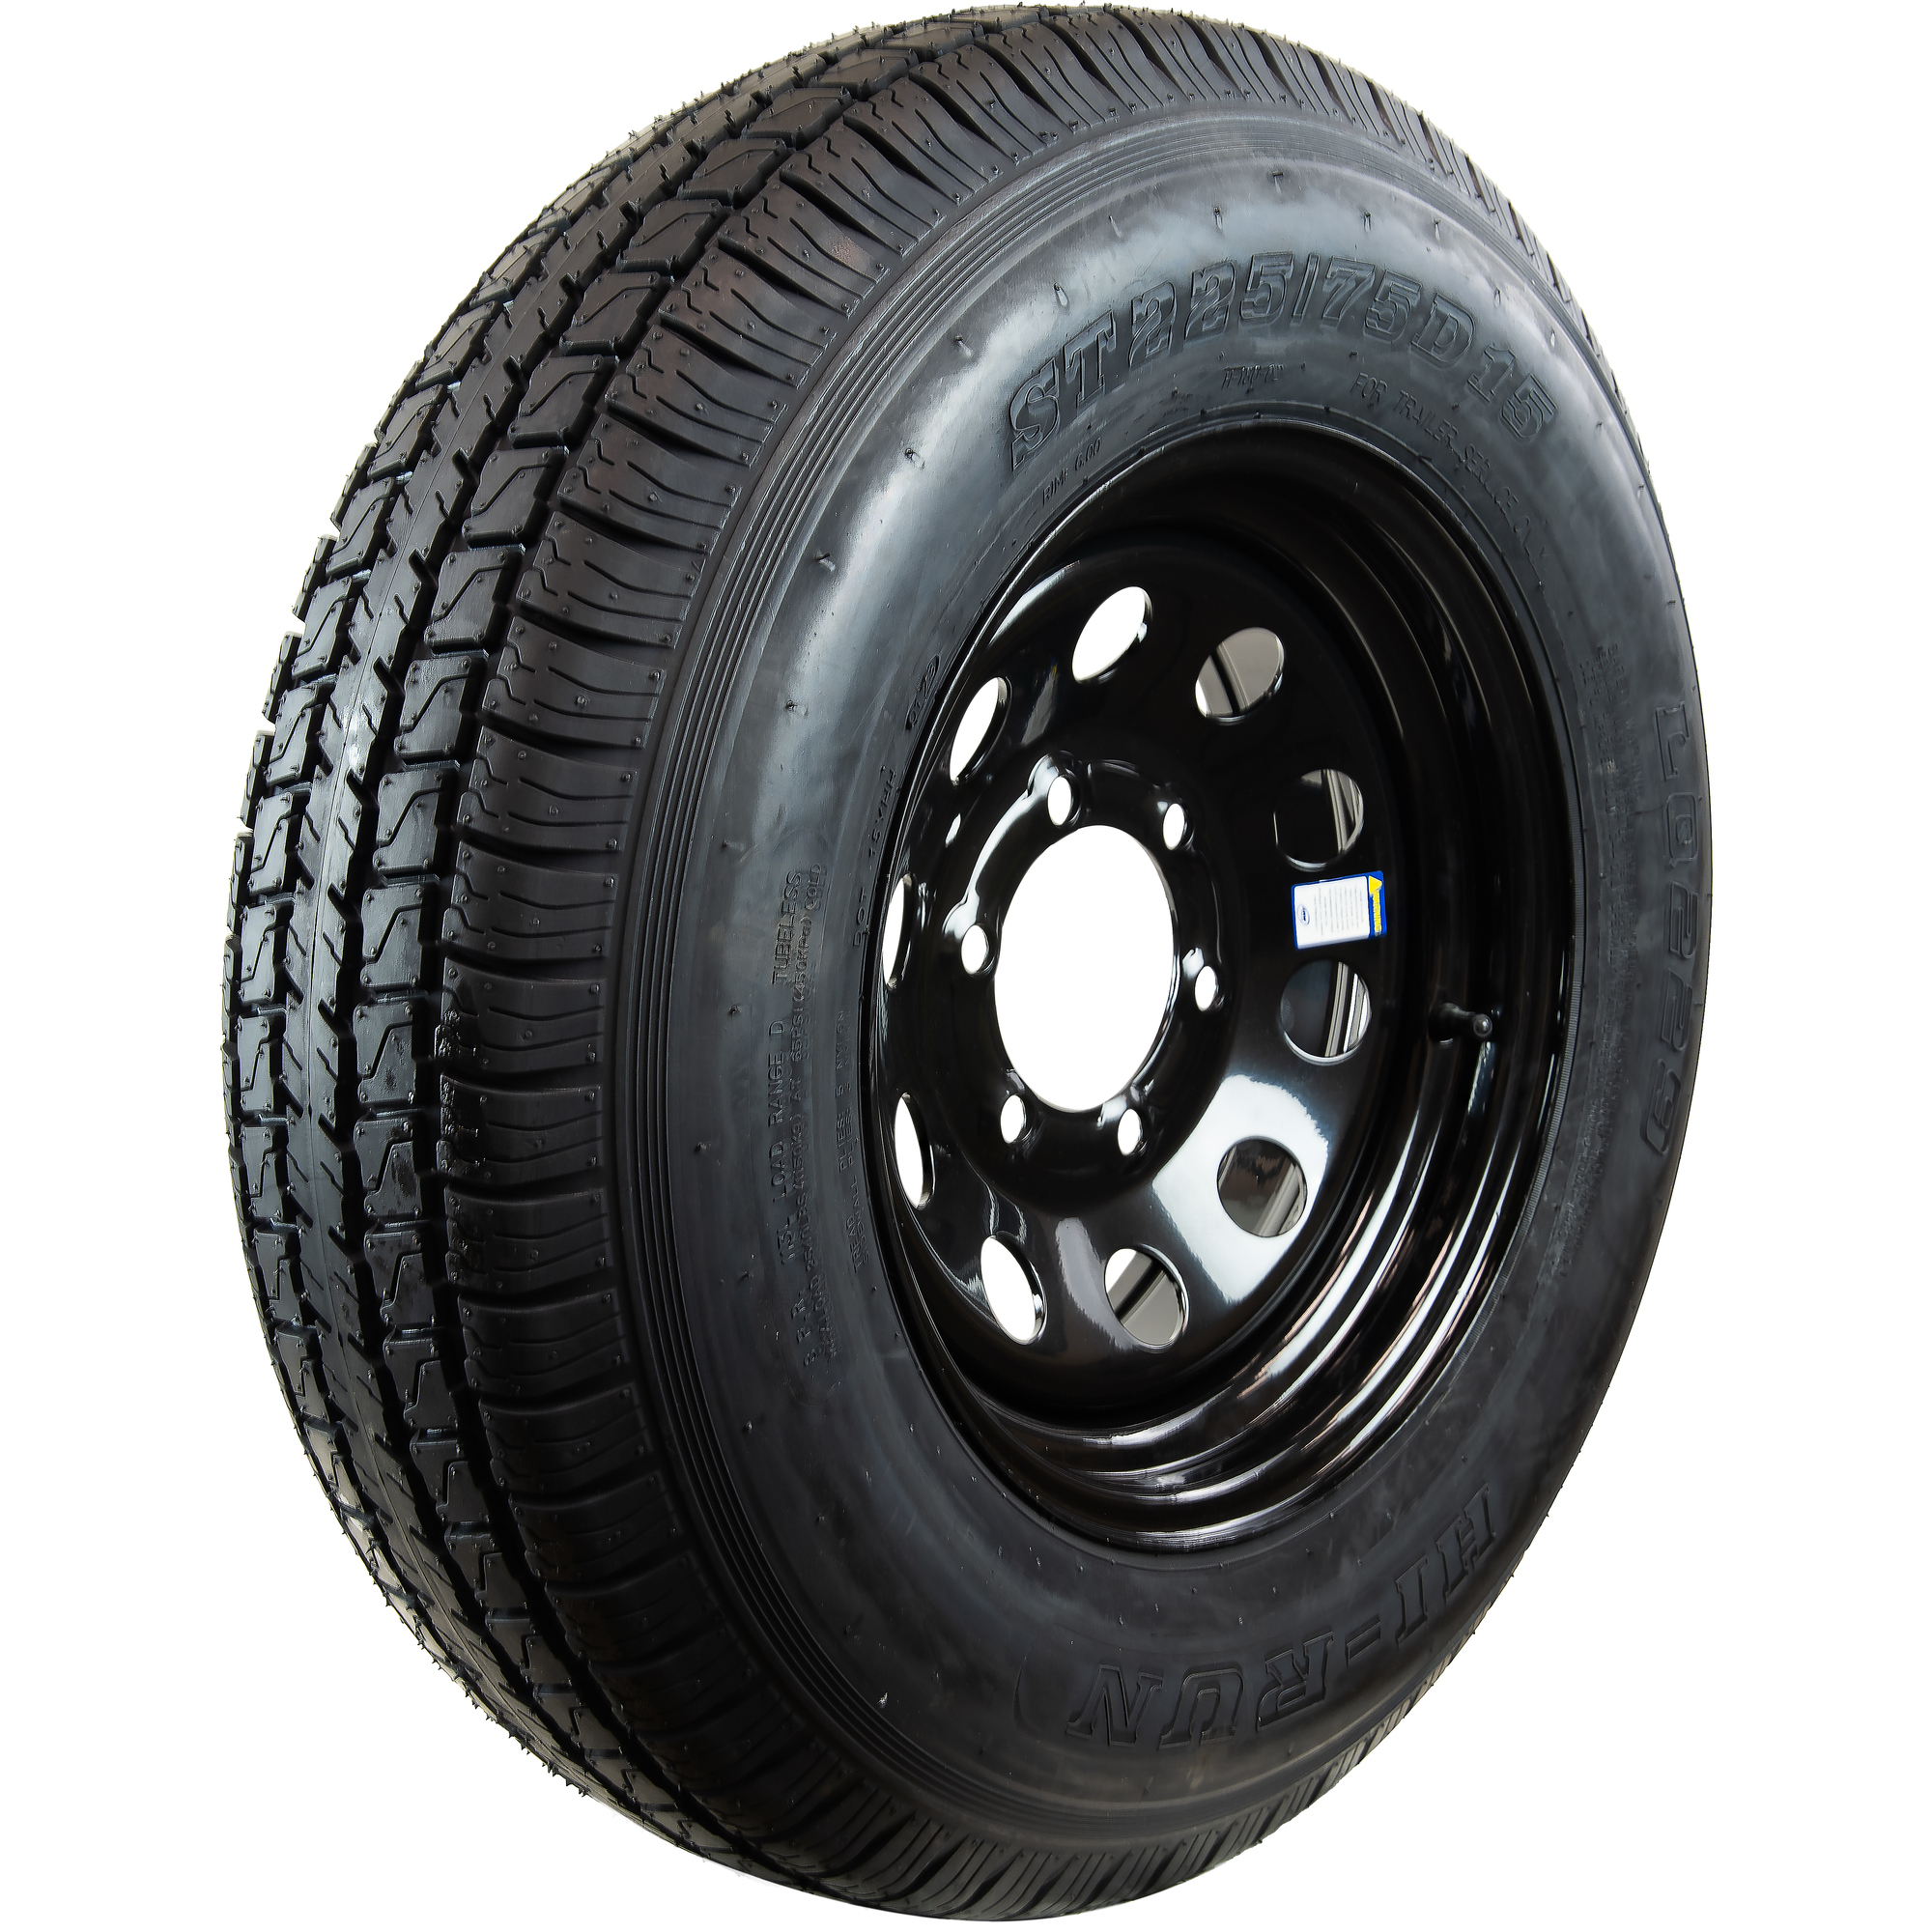 HI-RUN, Highway Trailer Tire Assembly, Bias Ply, Black Mod, Tire Size ST225/75D15 Load Range Rating D, Bolt Holes (qty.) 6 Model ASB1151